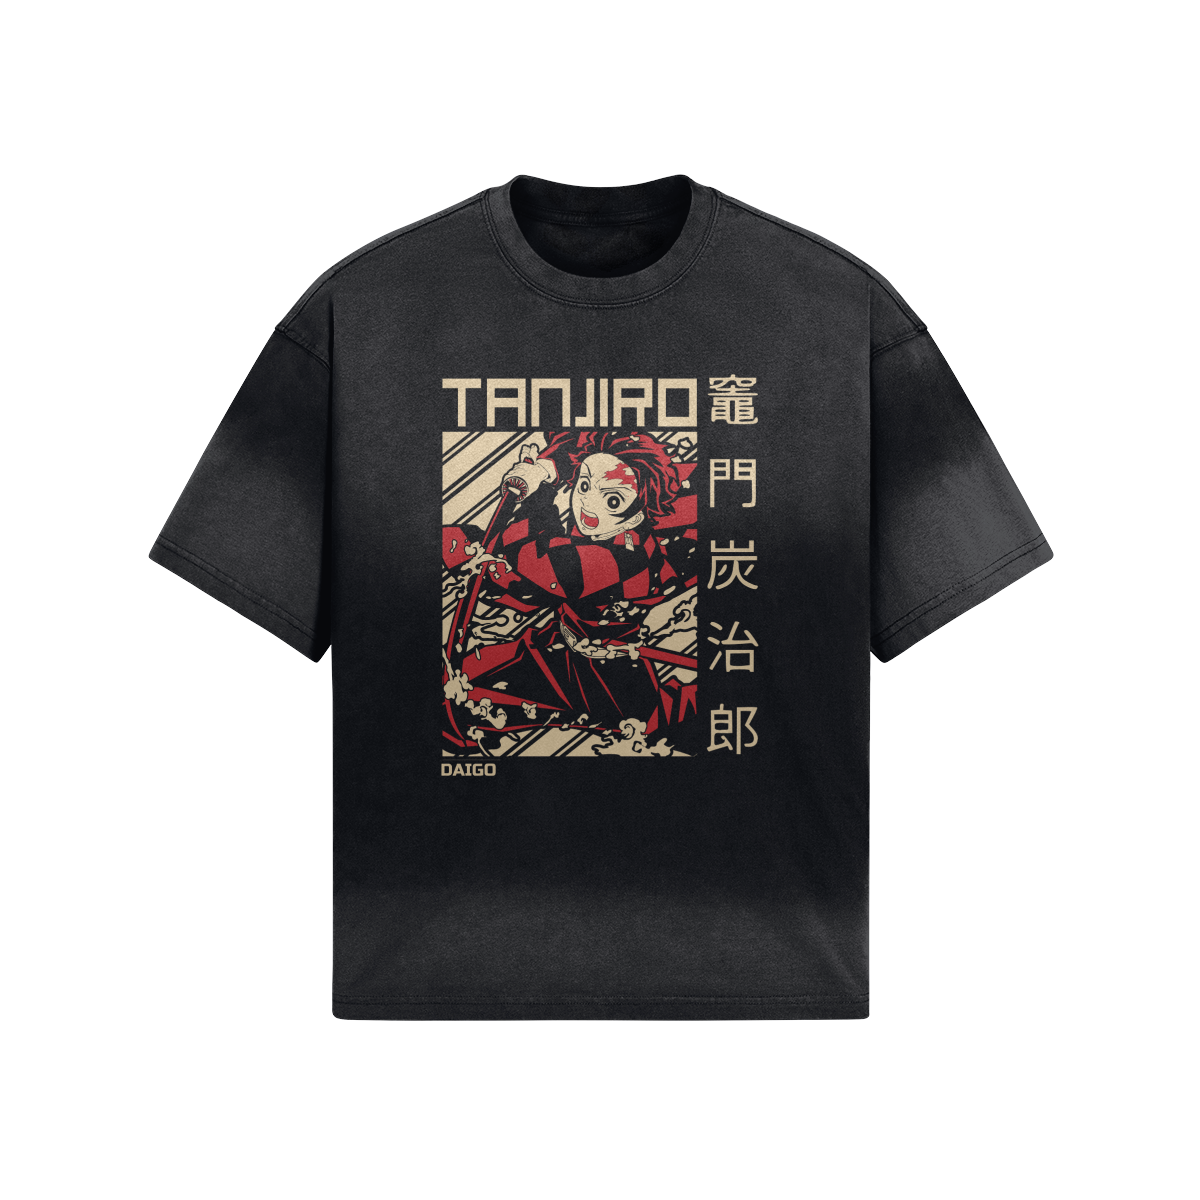 "Tanjiro" Oversized Tee